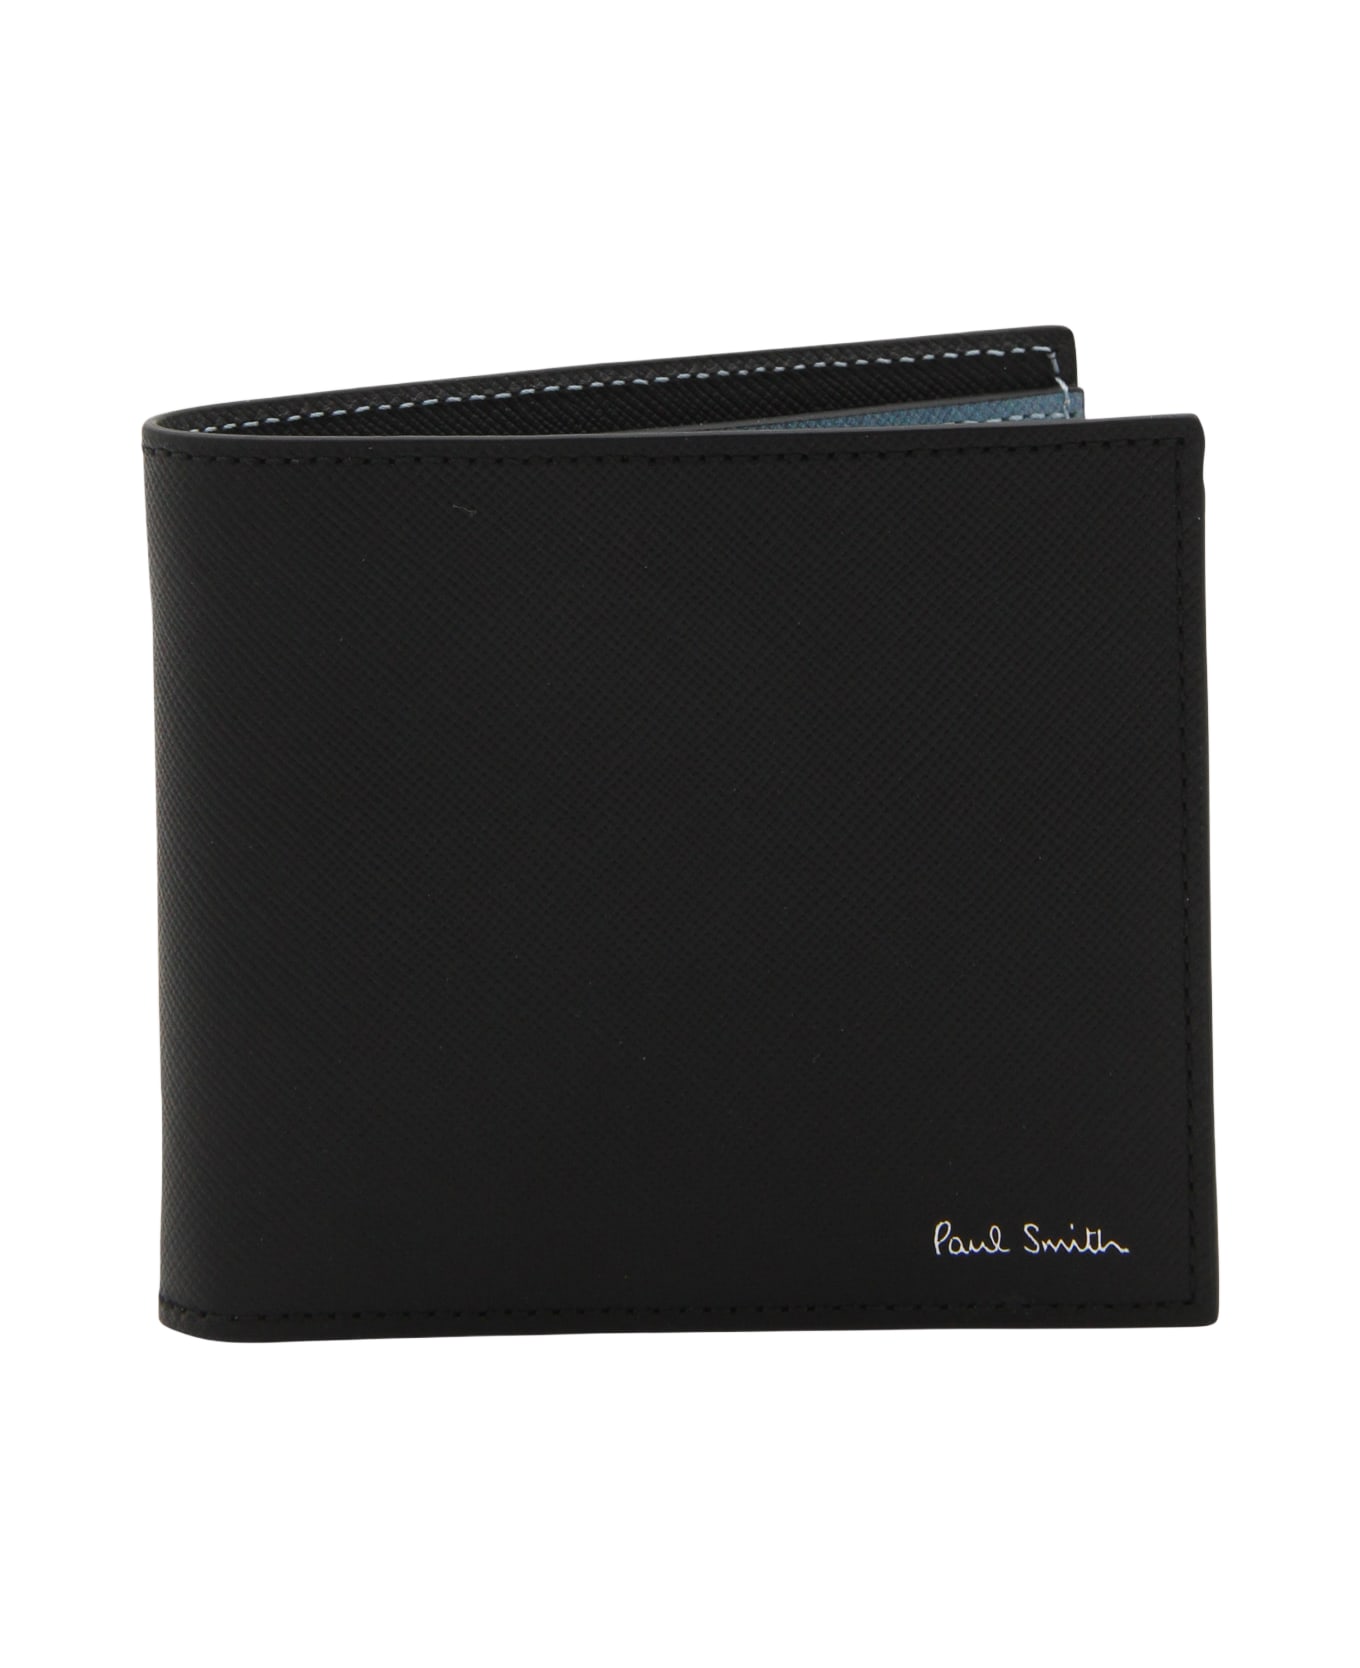 Paul Smith Black Multicolour Leather Wallet - Black